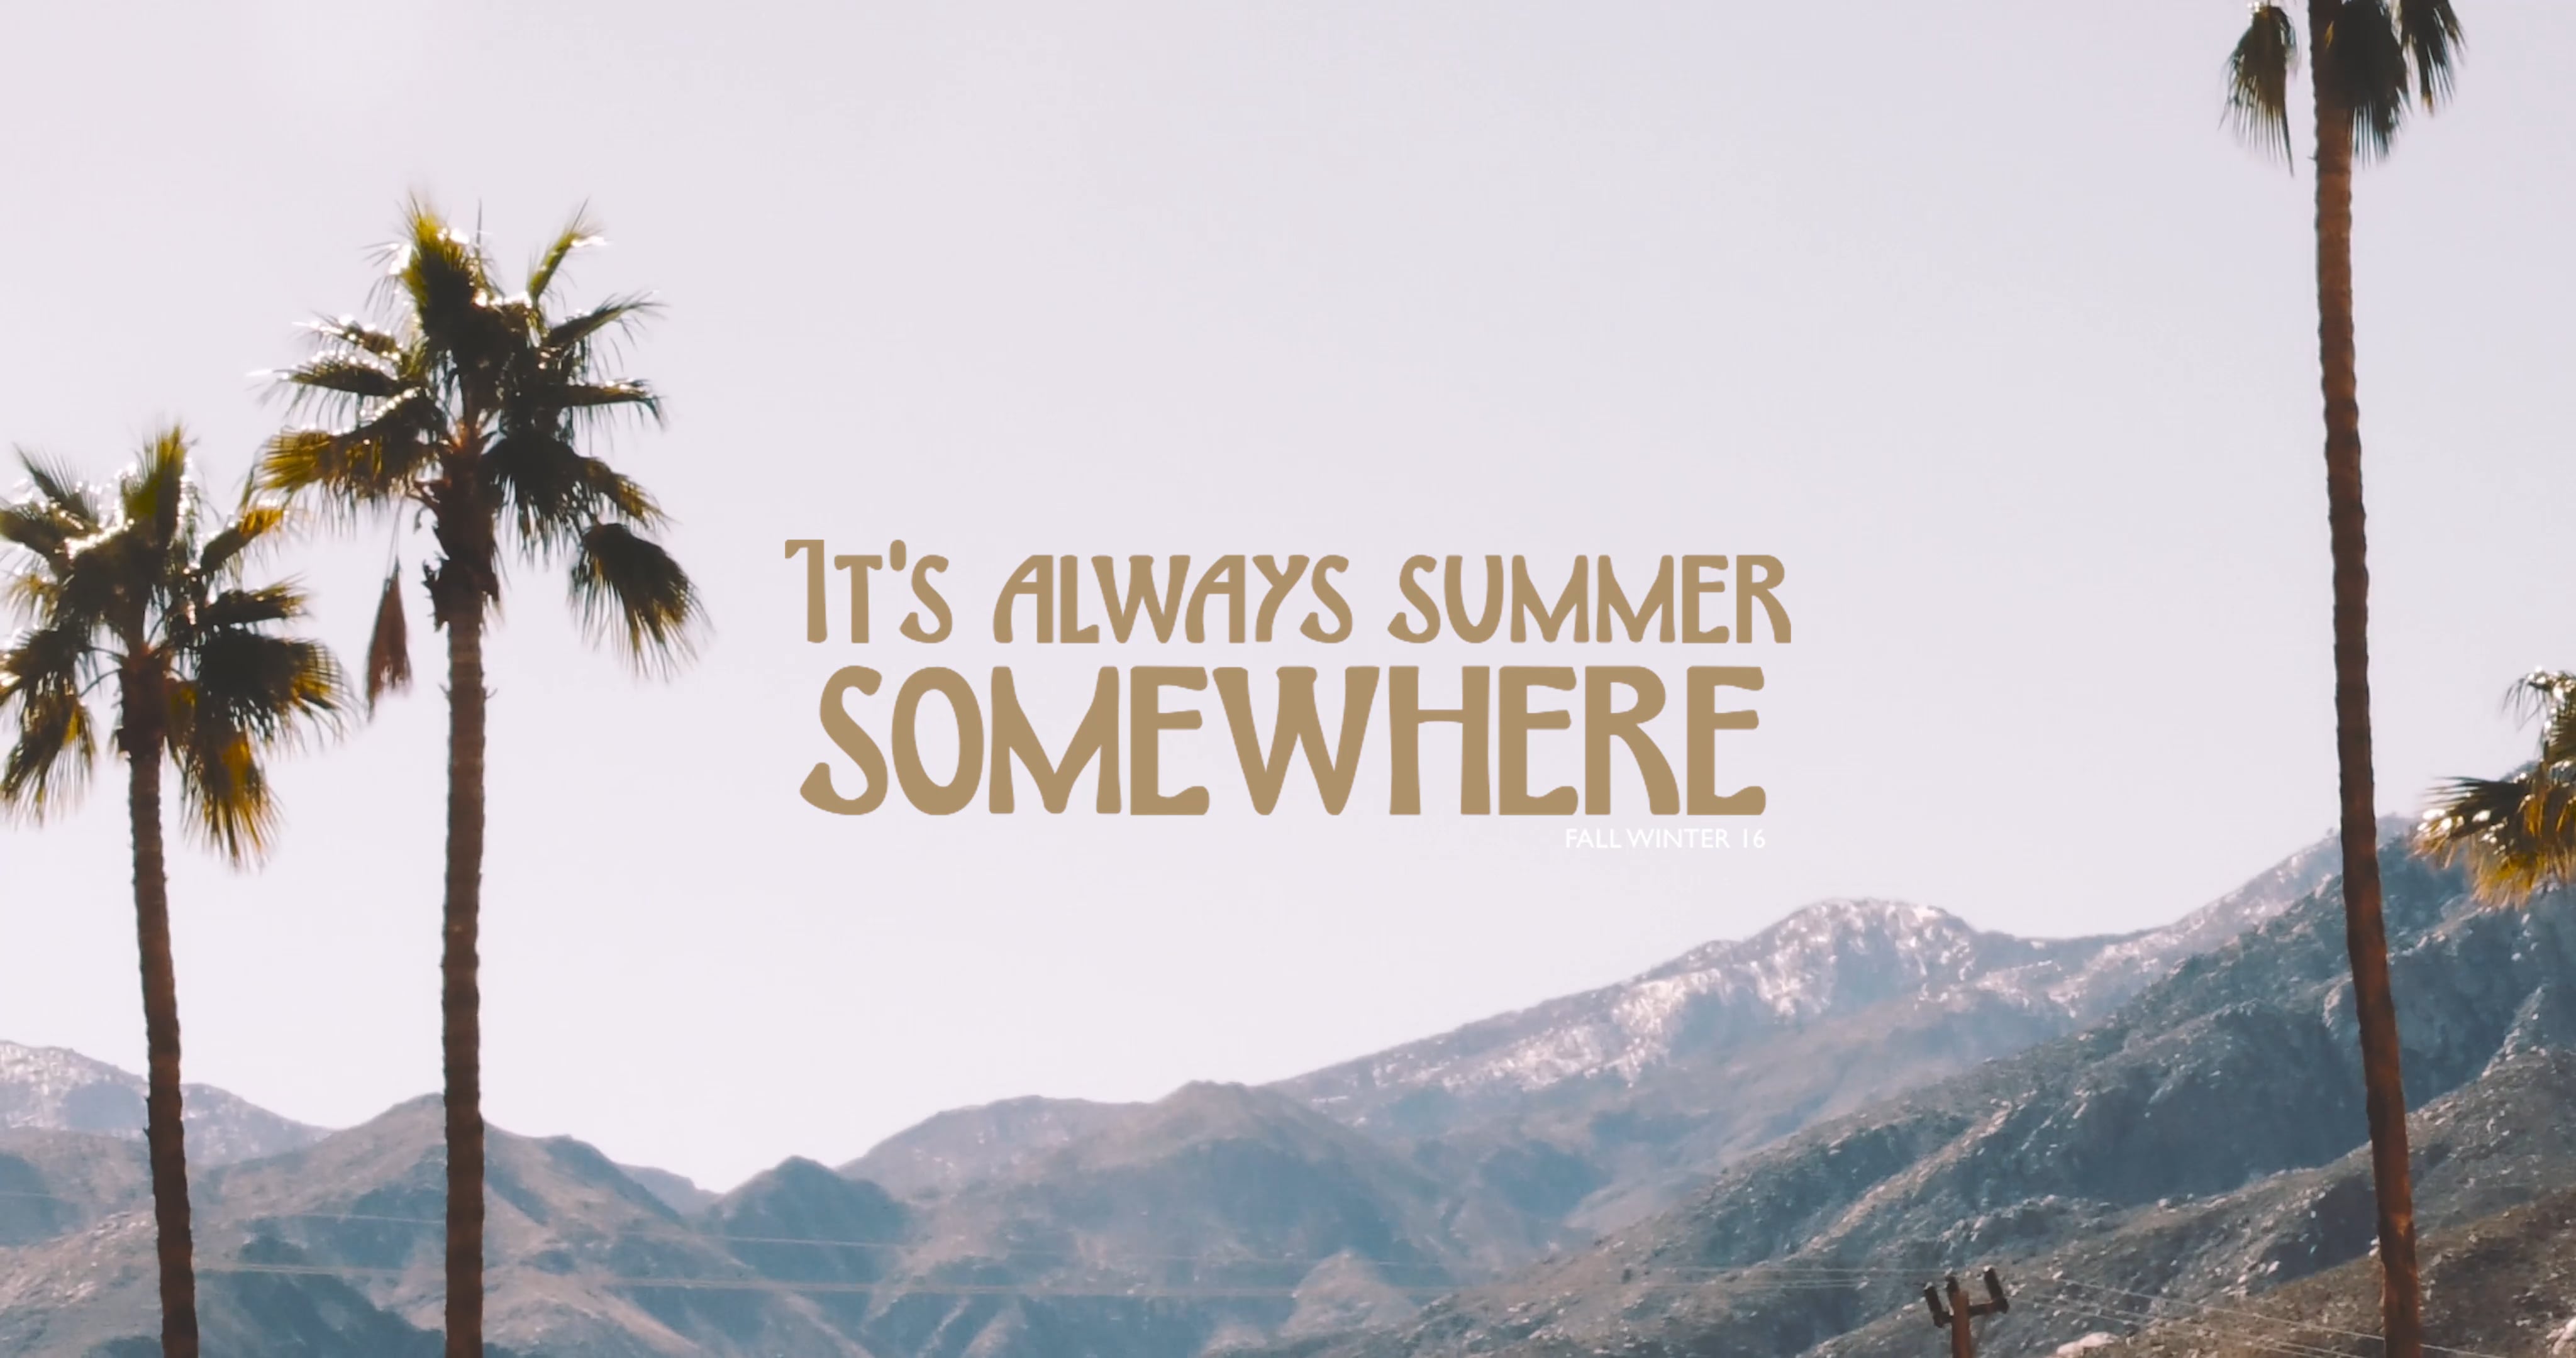 It Always Summer Somewhere - Van Palma Fall/Winter 16 on Vimeo